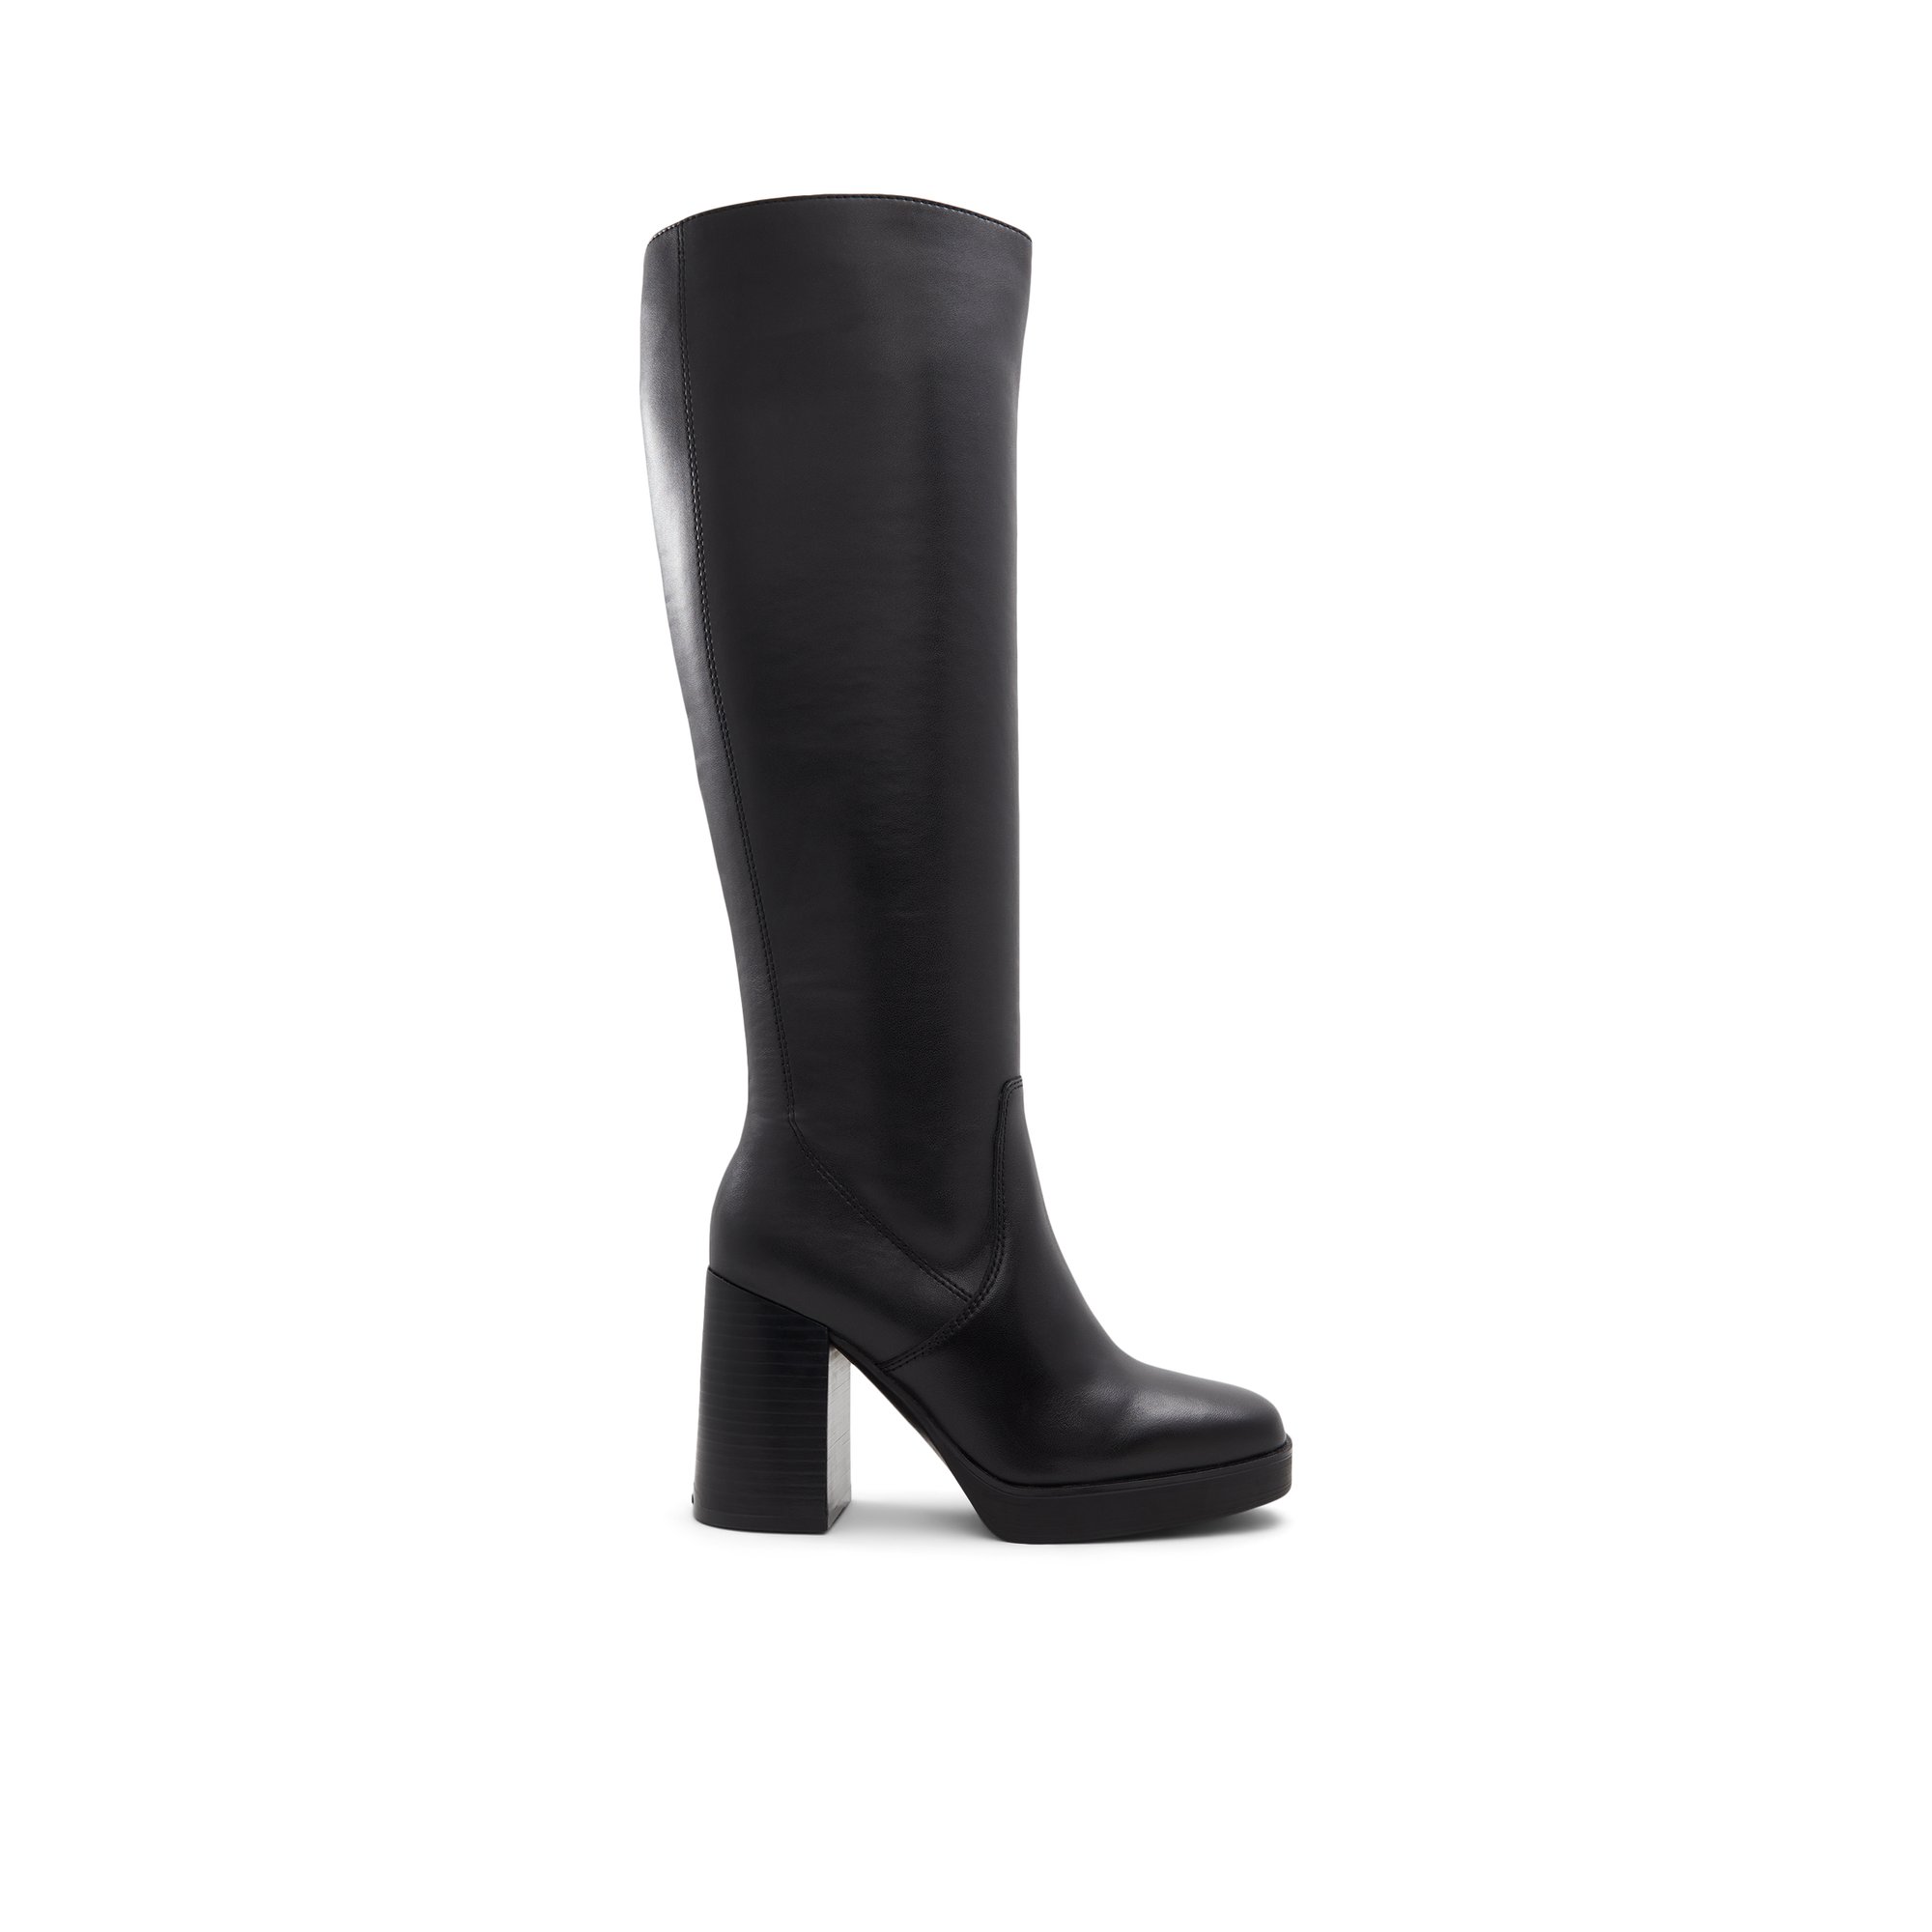 ALDO Equine - Women's Boots Tall - Black